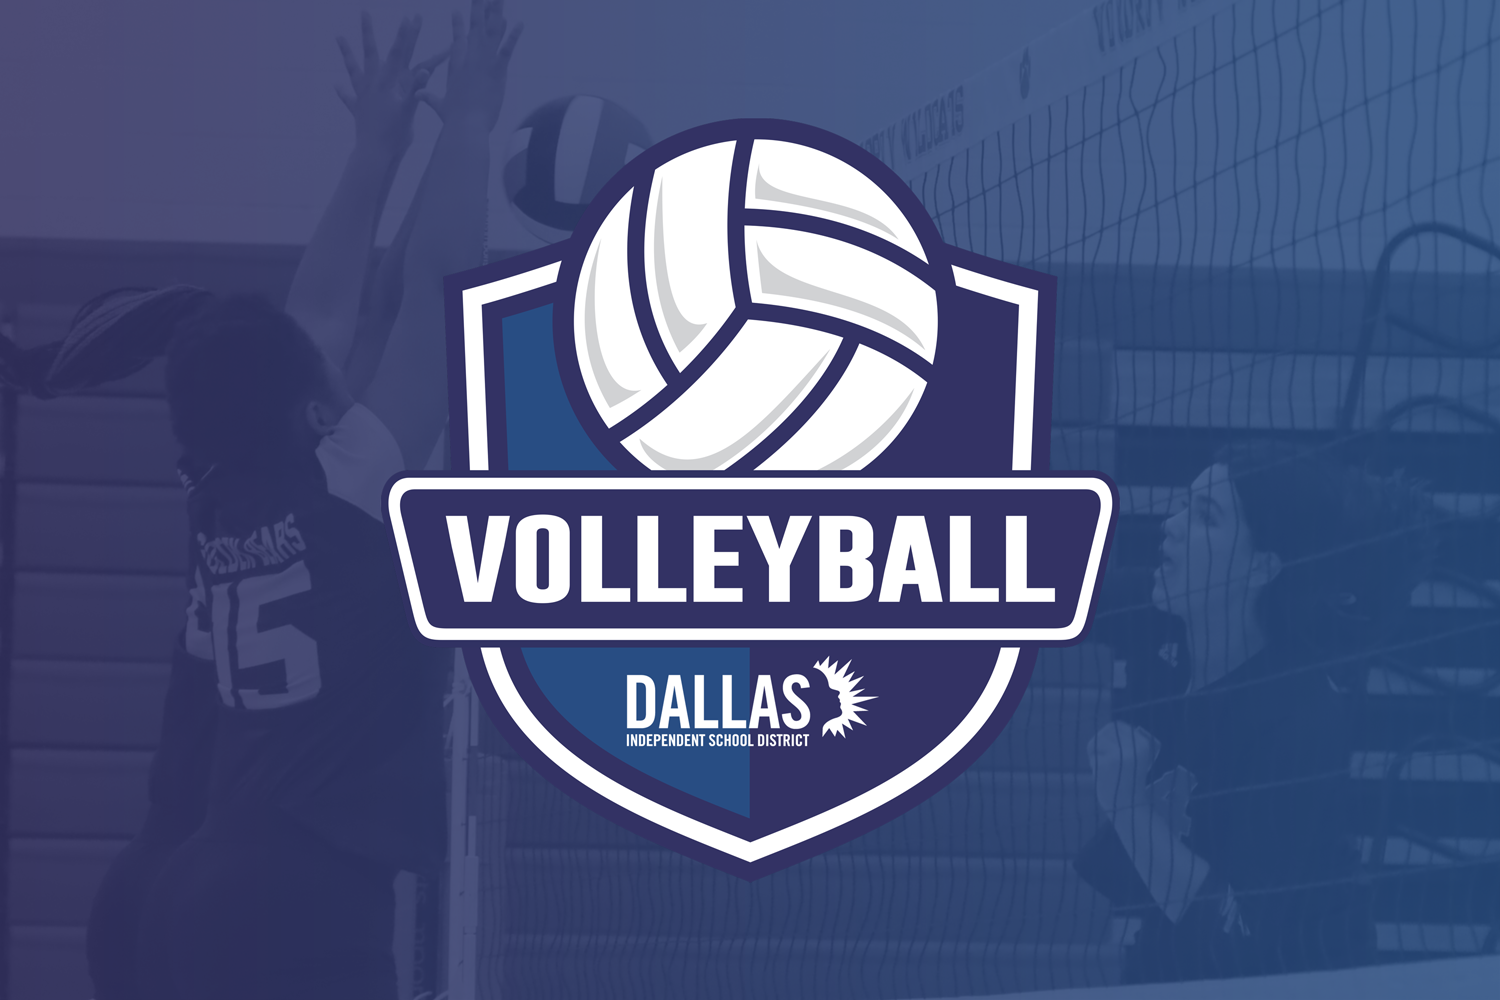  Dallas ISD Volleyball Academy Starts October 17